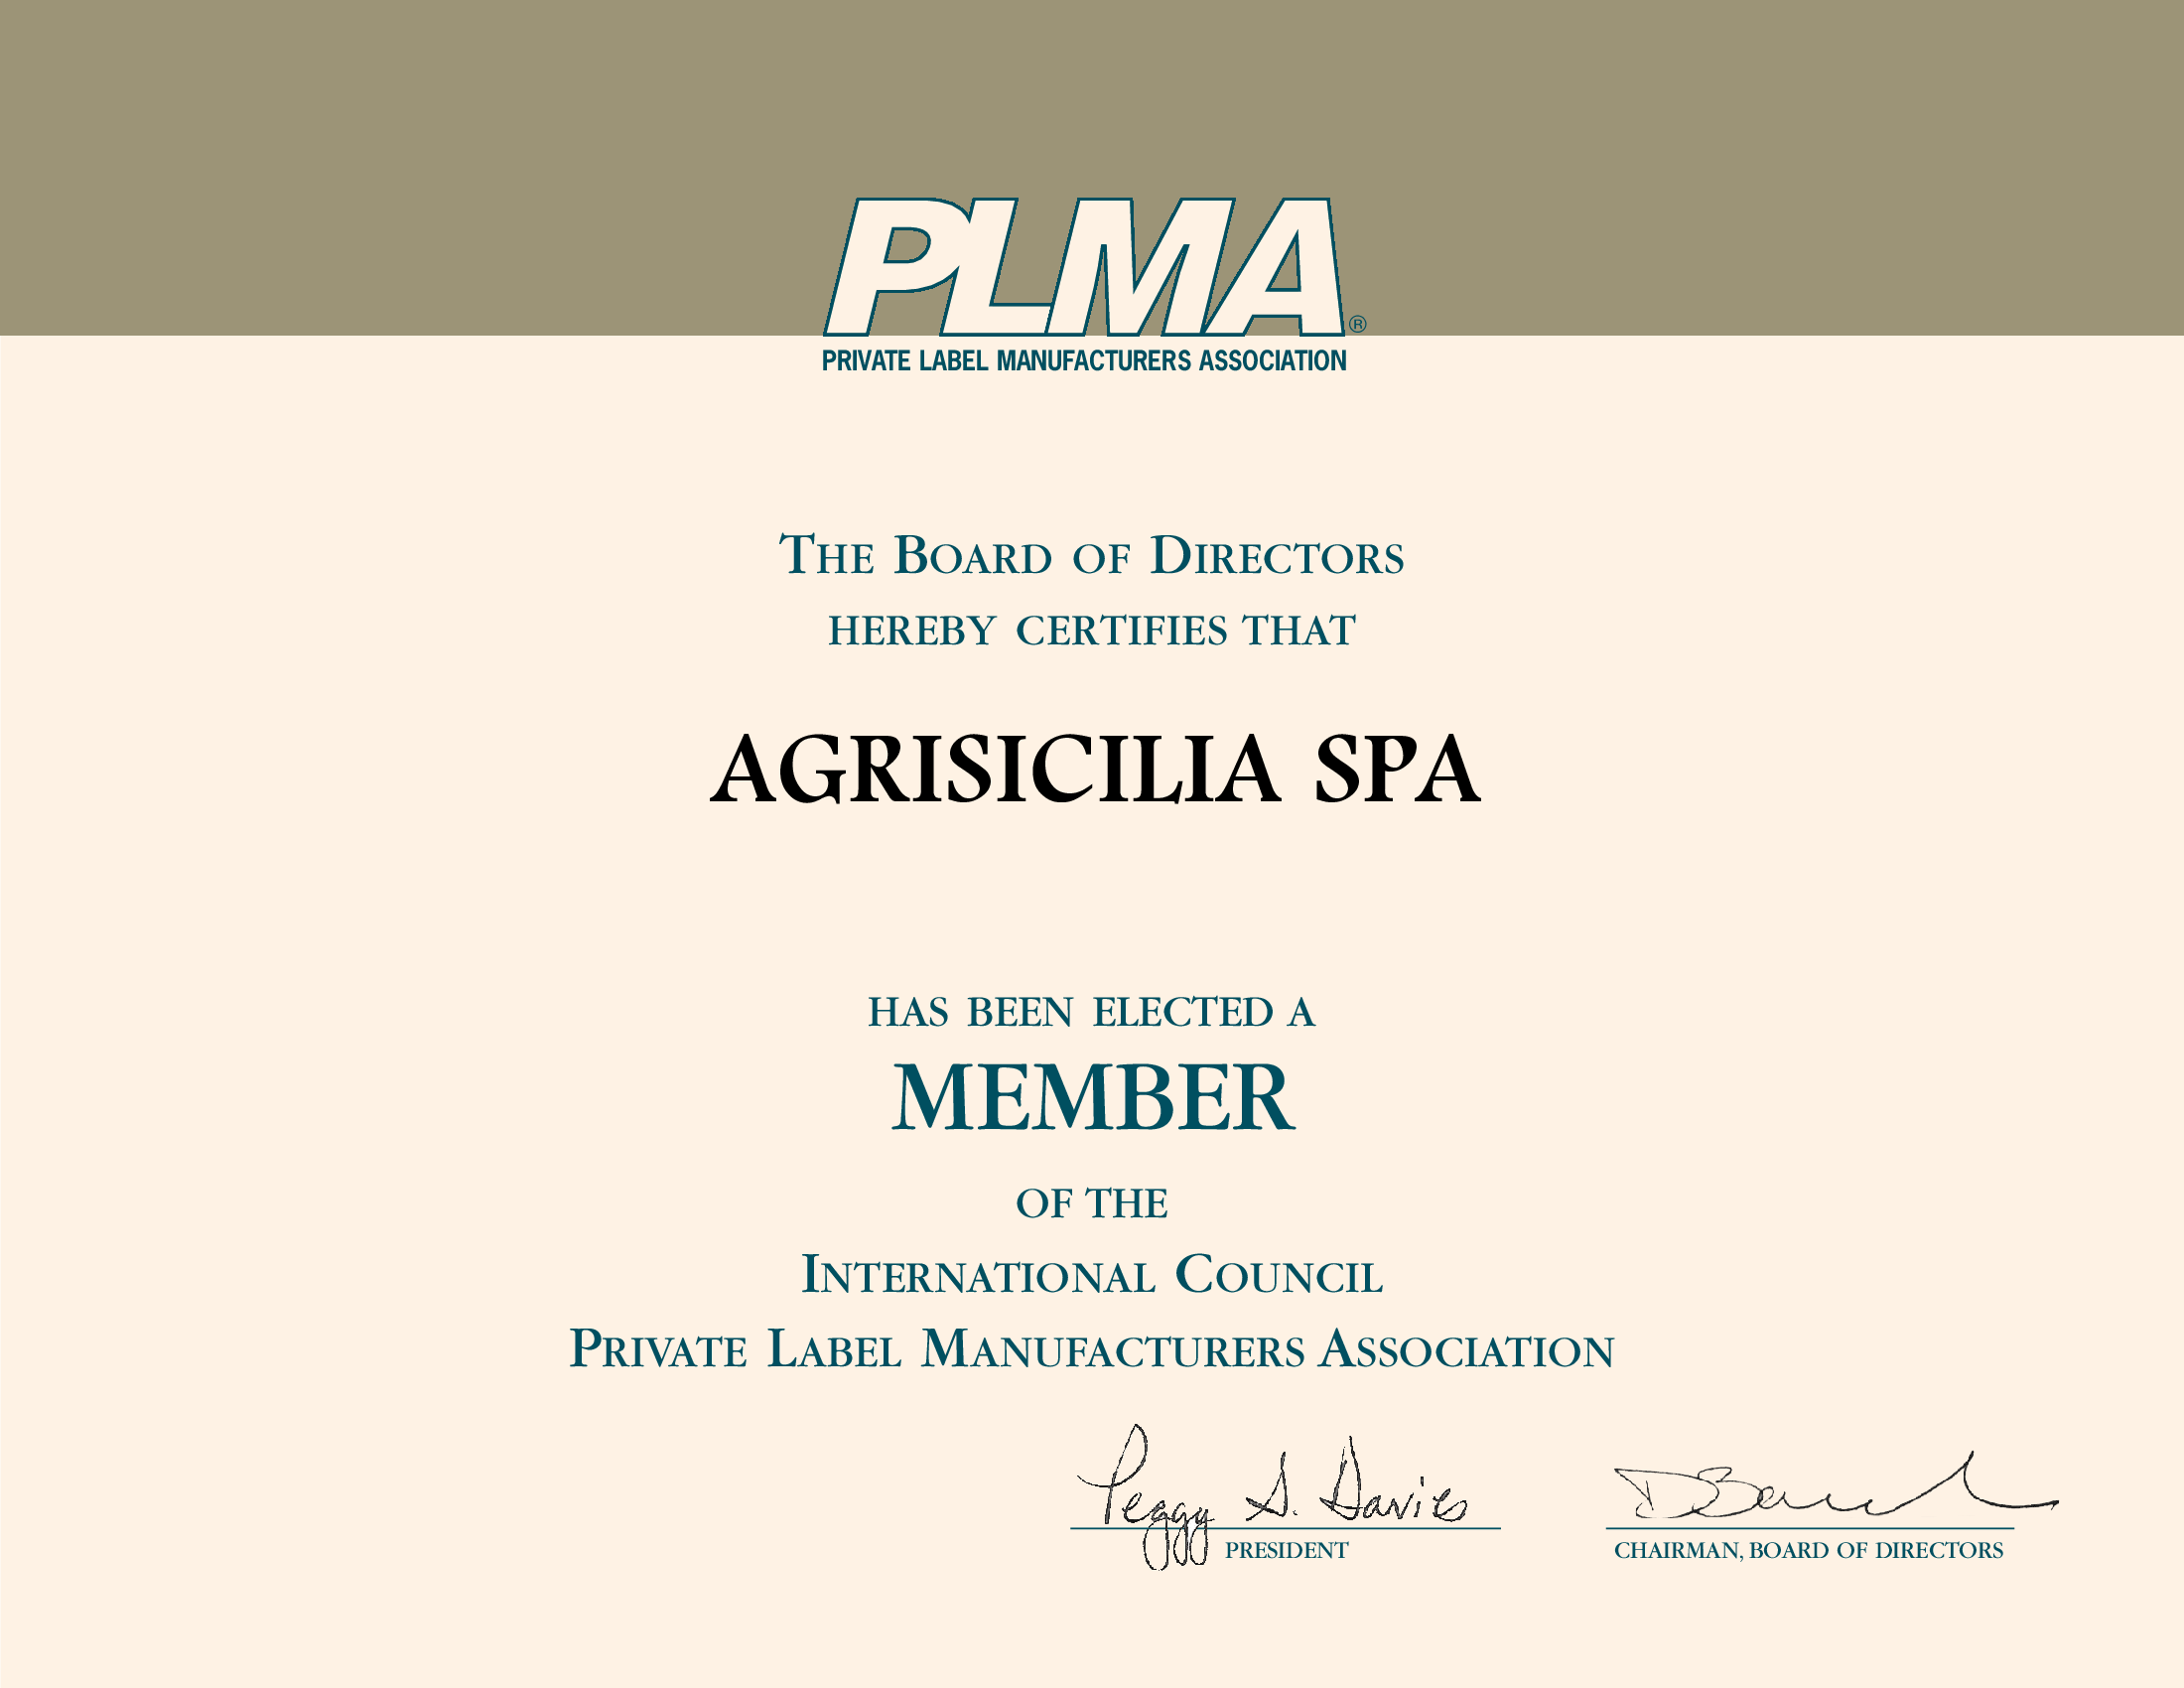 Agrisicilia elected member of PLMA international council